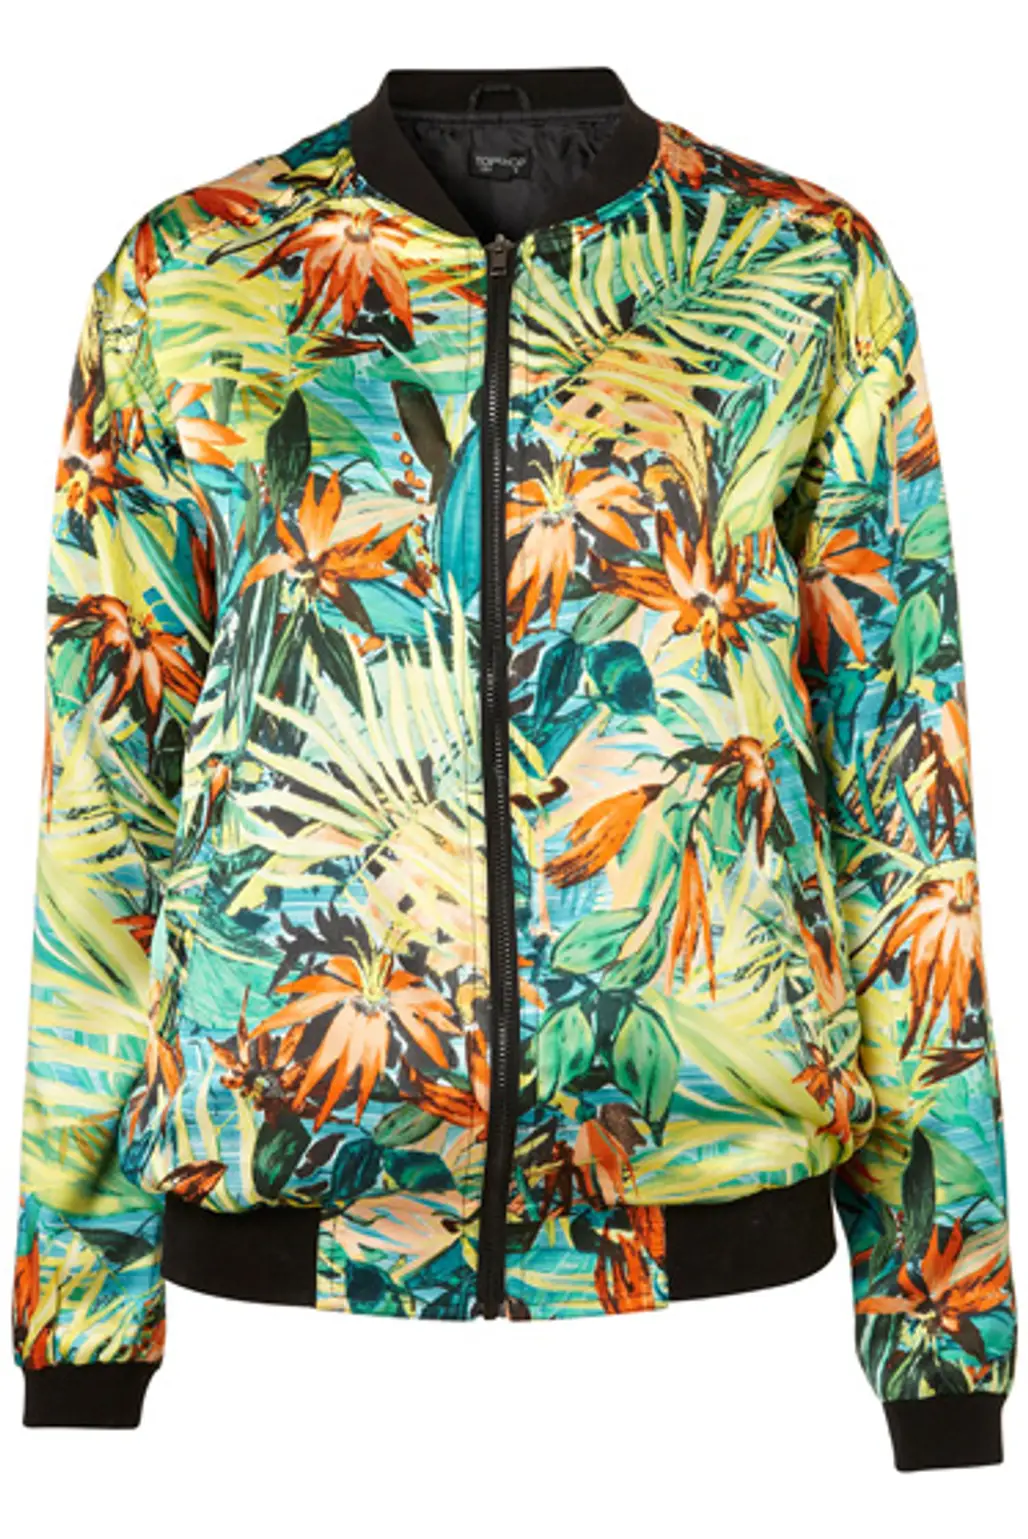 Topshop Hawaiian Floral Bomber Jacket